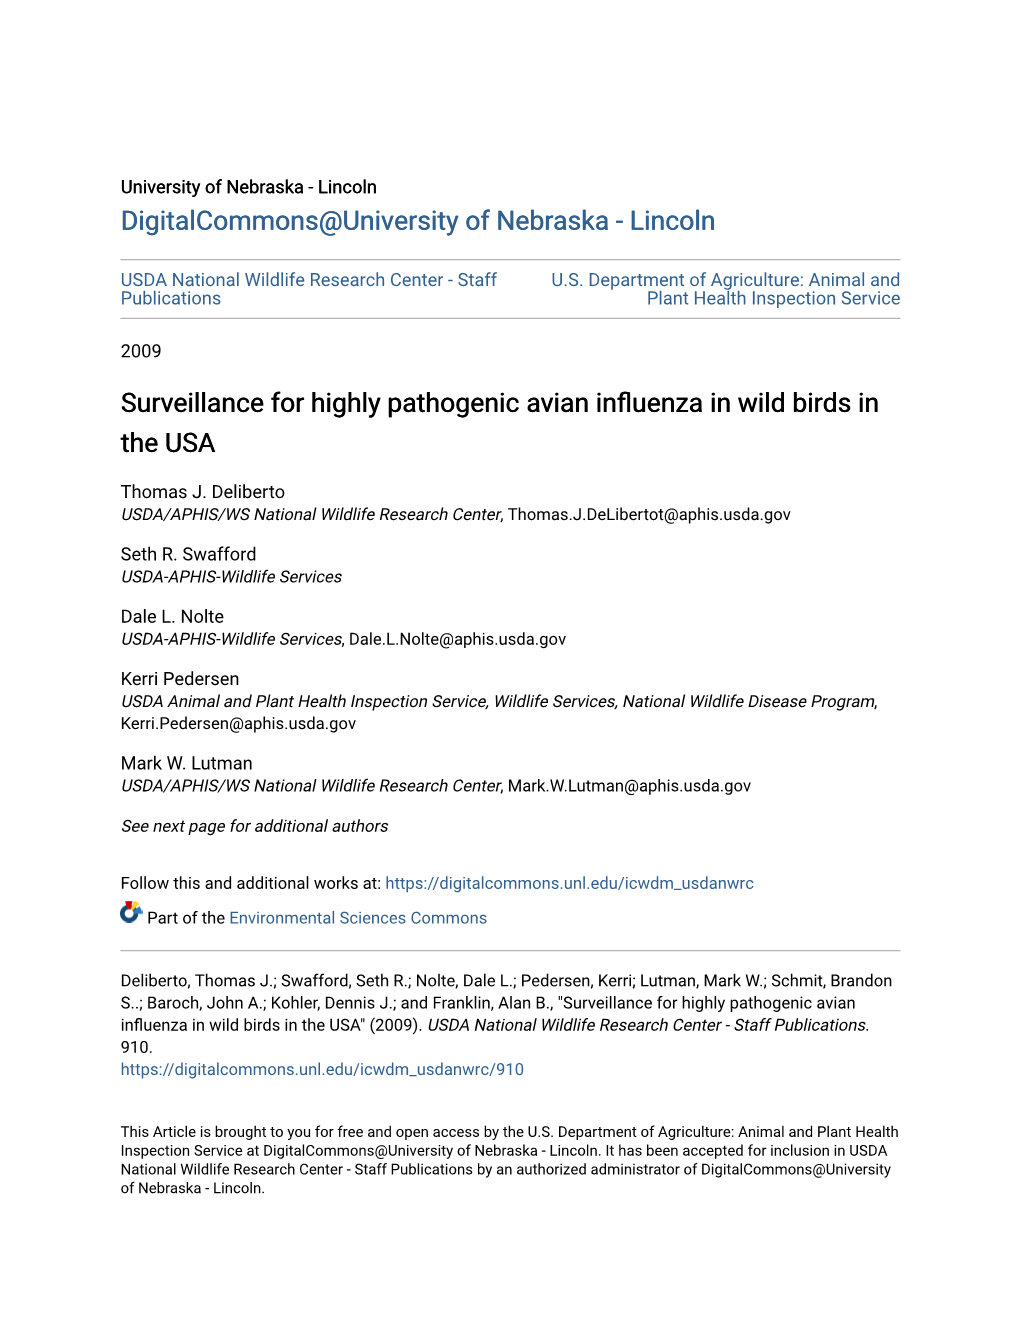 Surveillance for Highly Pathogenic Avian Influenza in Wild Birds in the USA